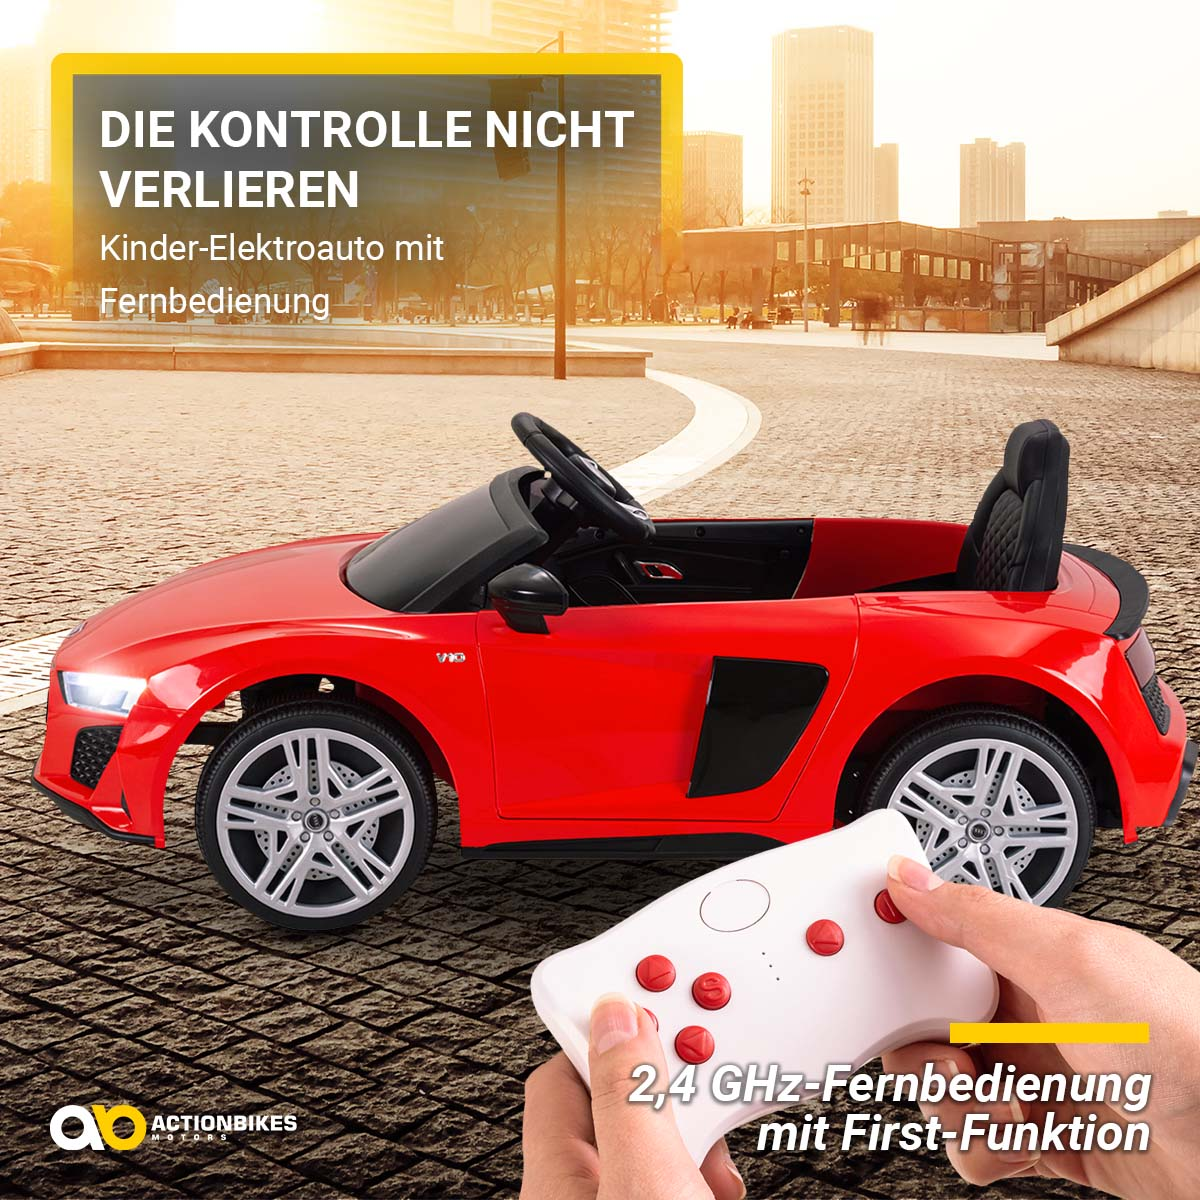 ACTIONBIKES MOTORS Audi R8 4S Spyder Lizenziert Elektroauto